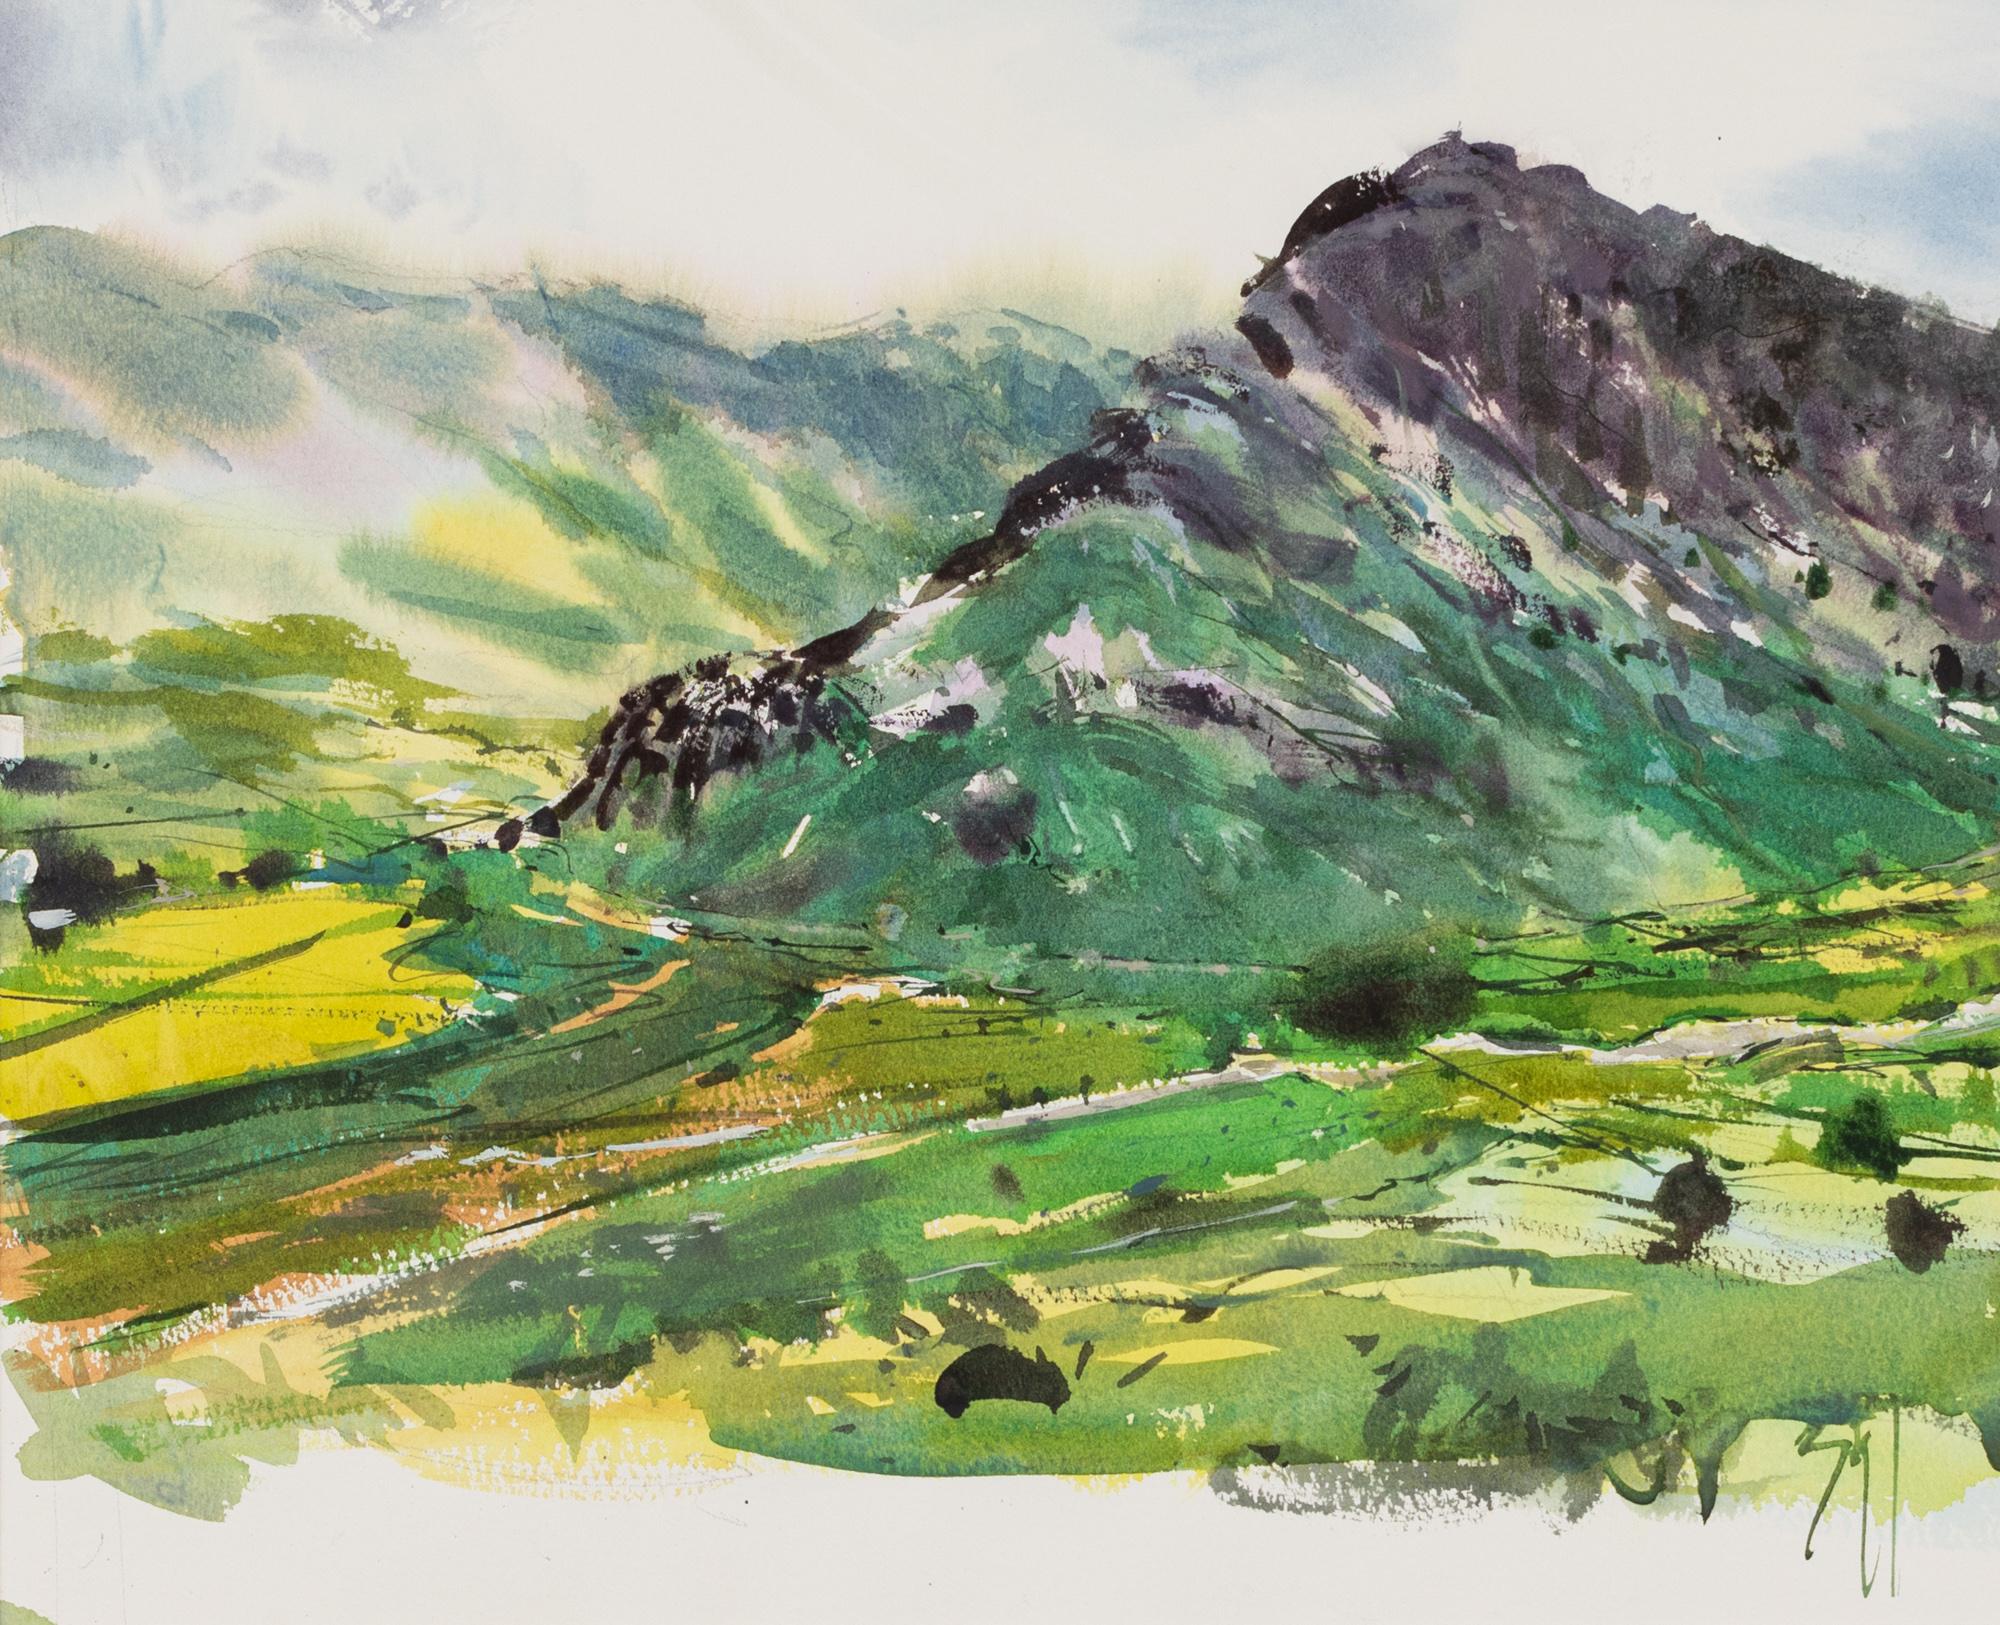 "Lake District 1" A Watercolor Painting of Gatesgarth Mountain Range in UK